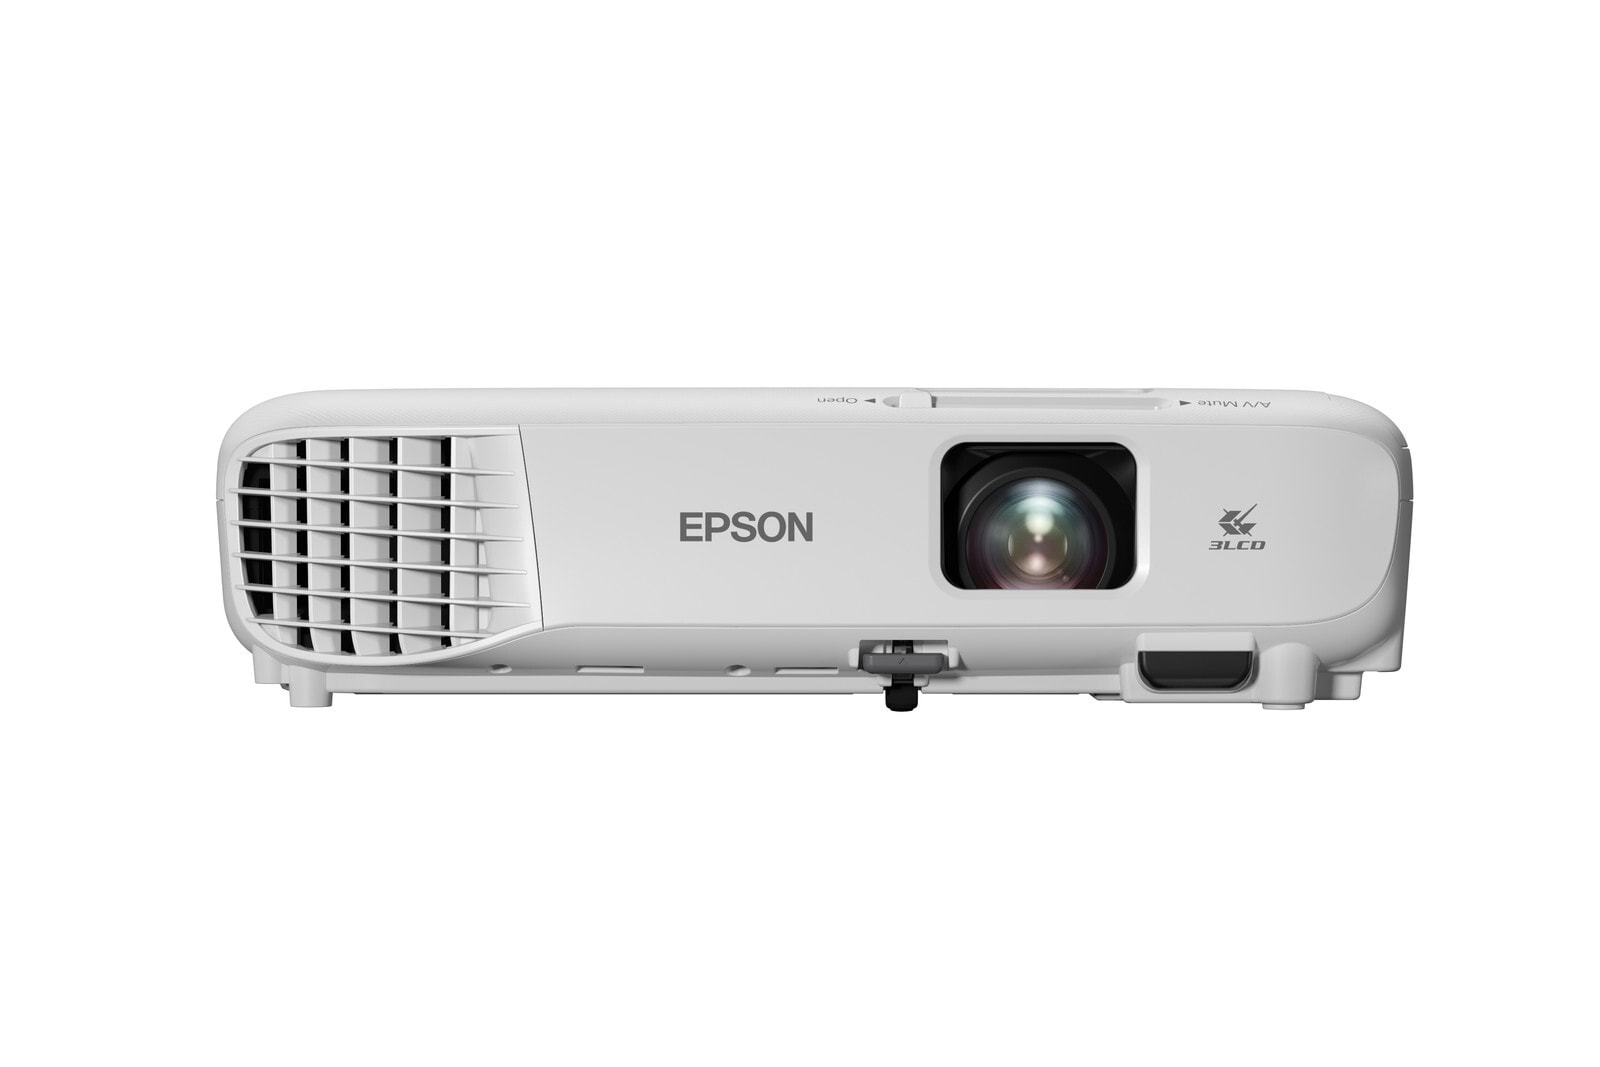 Epson EB-W06 мультимедиа-проектор 3700 лм 3LCD WXGA (1280x800) Портативный проектор Белый V11H973040